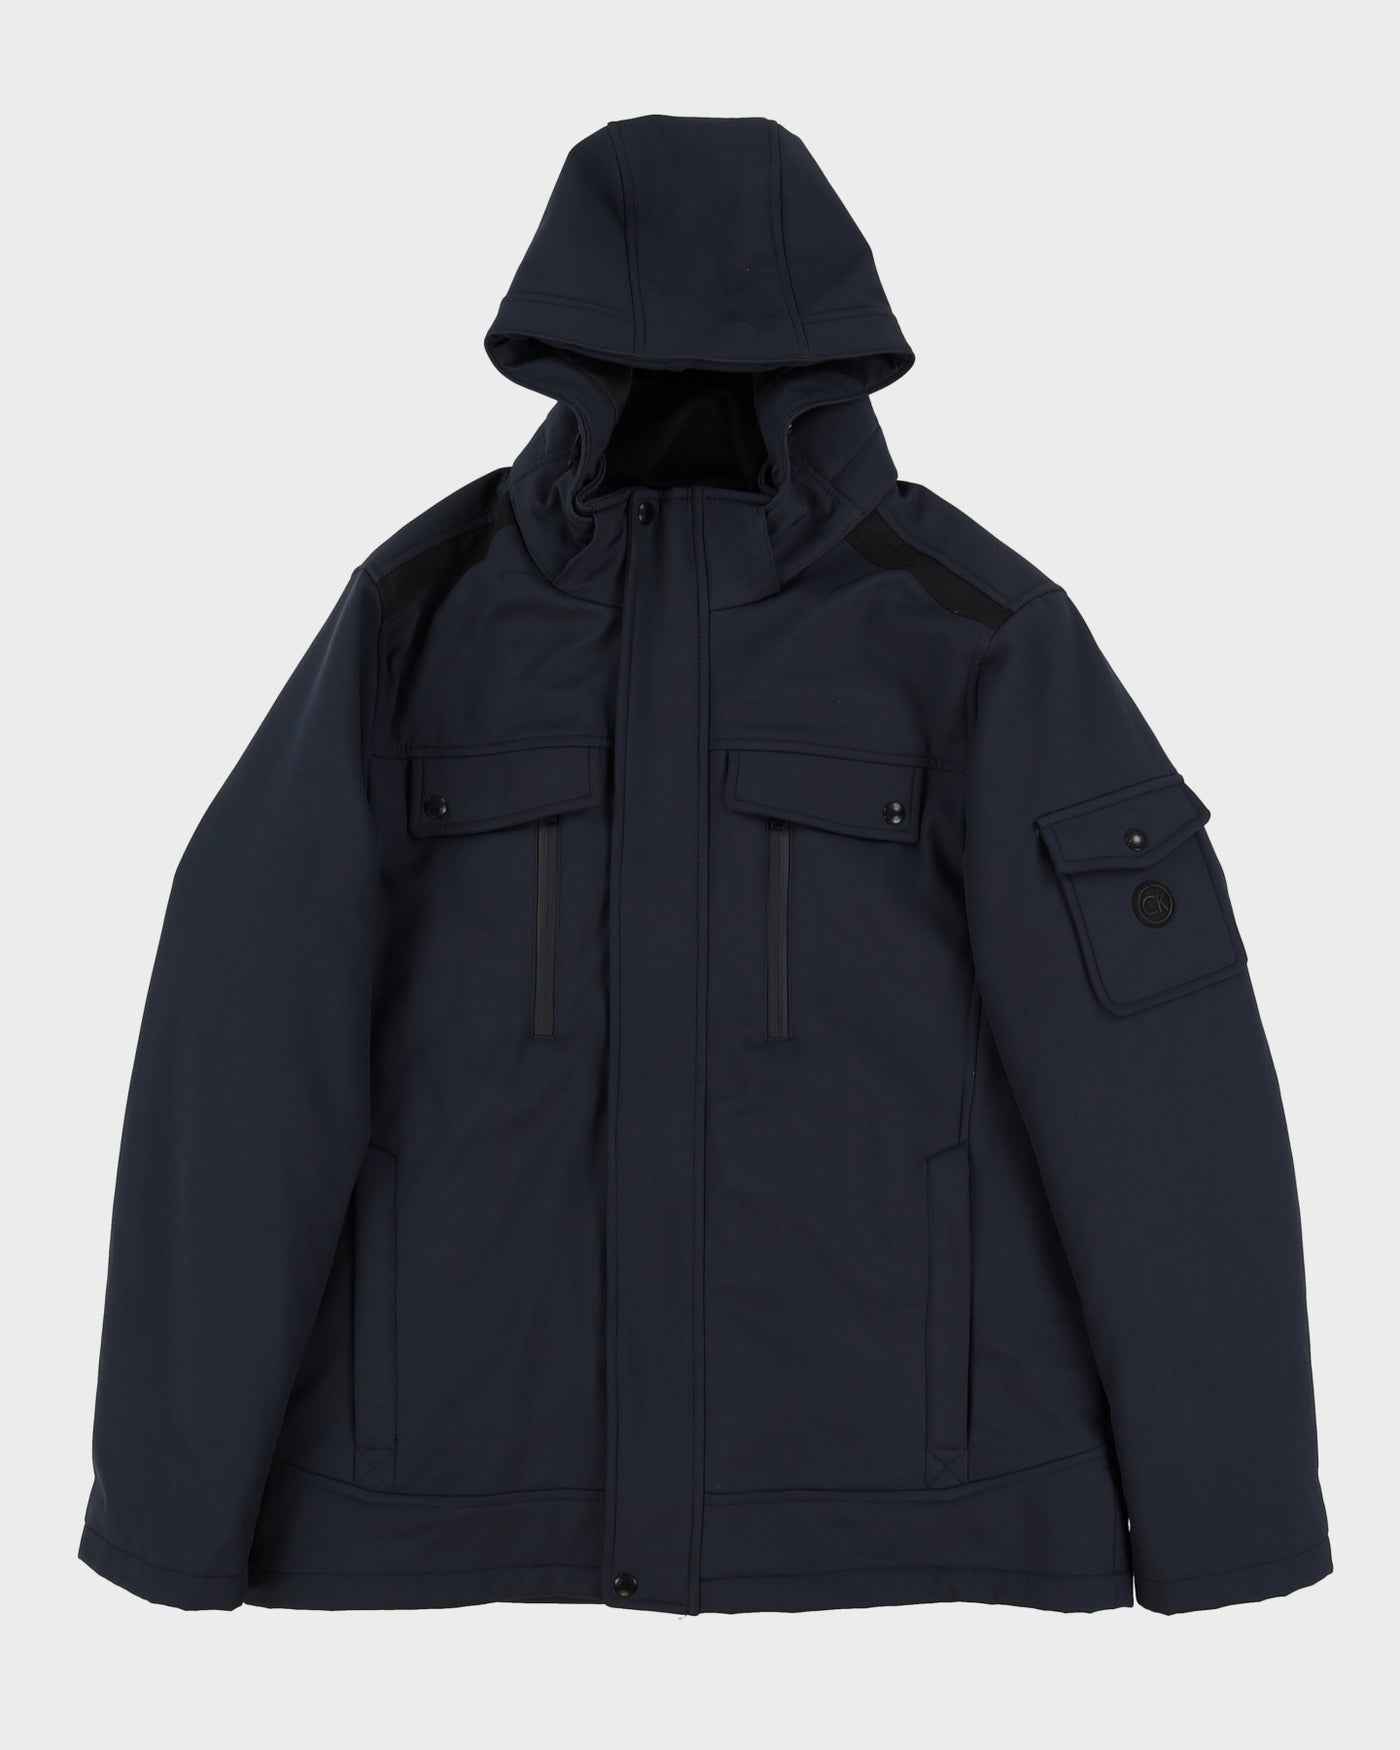 Calvin Klein Navy Hooded Jacket - M